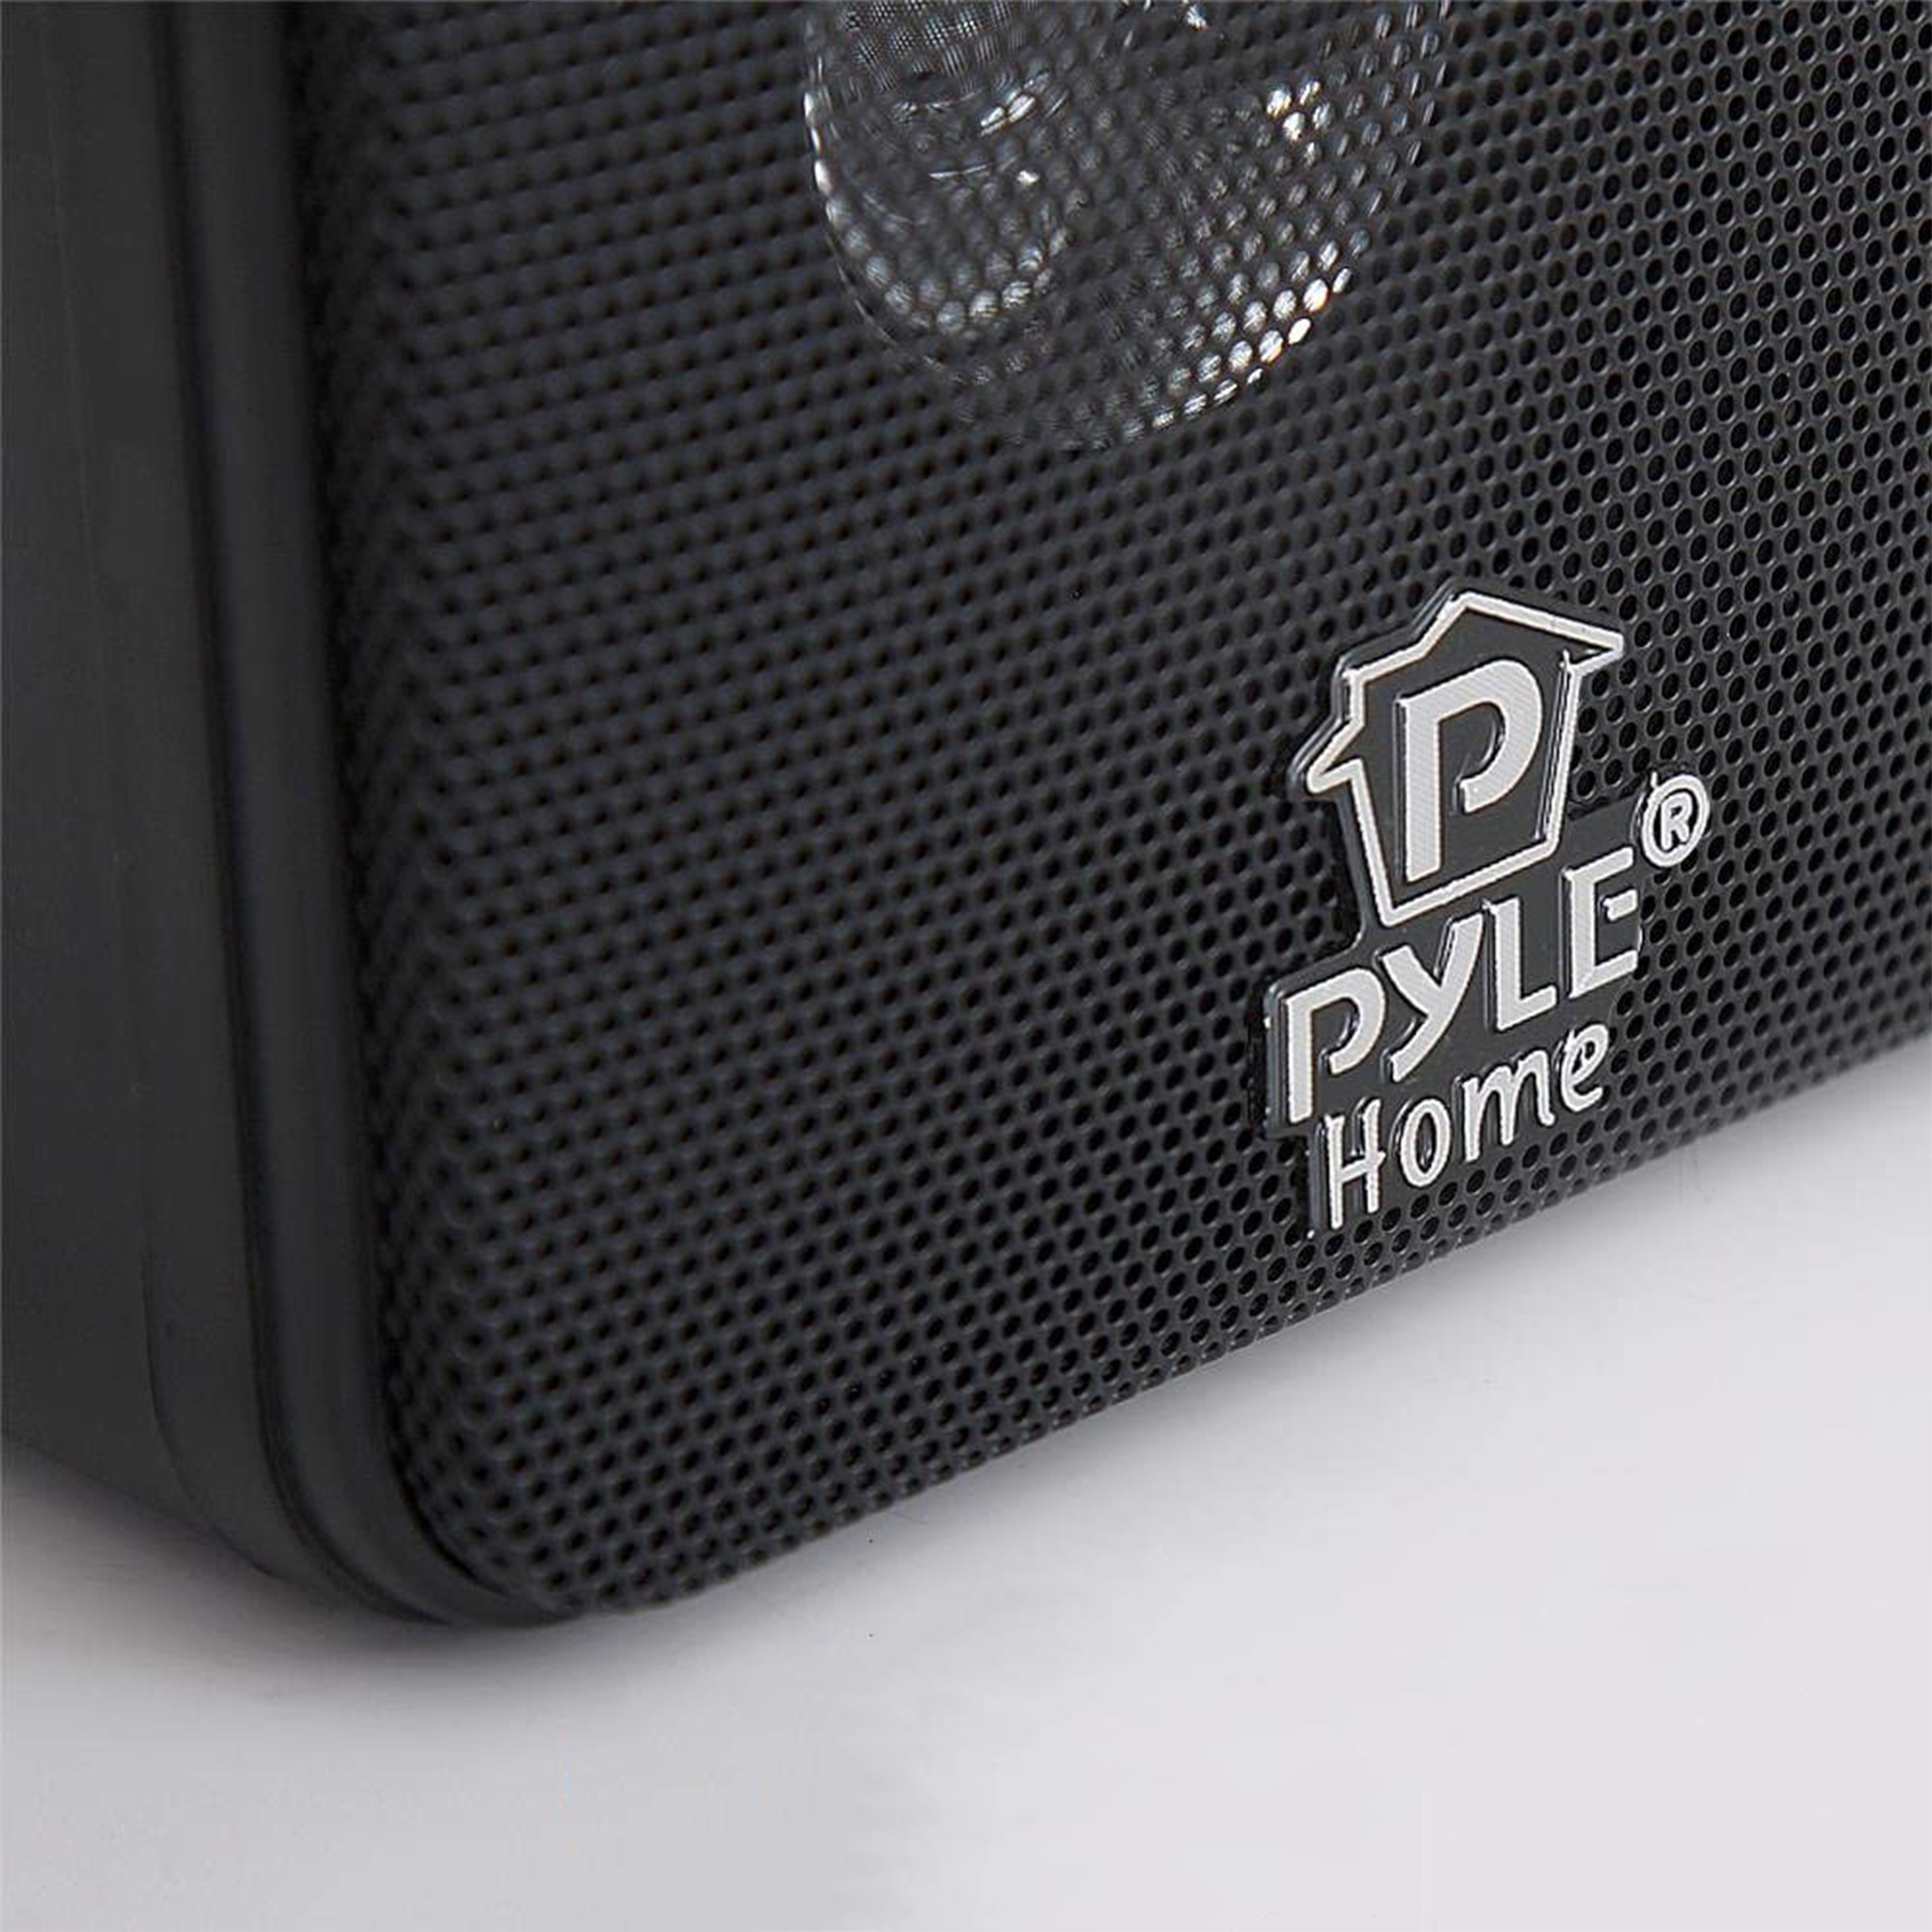 Pyle PCB3BK 3 Inch 100W Mini Cube Bookshelf Stereo Speakers, Black (4 Speakers) - image 3 of 5